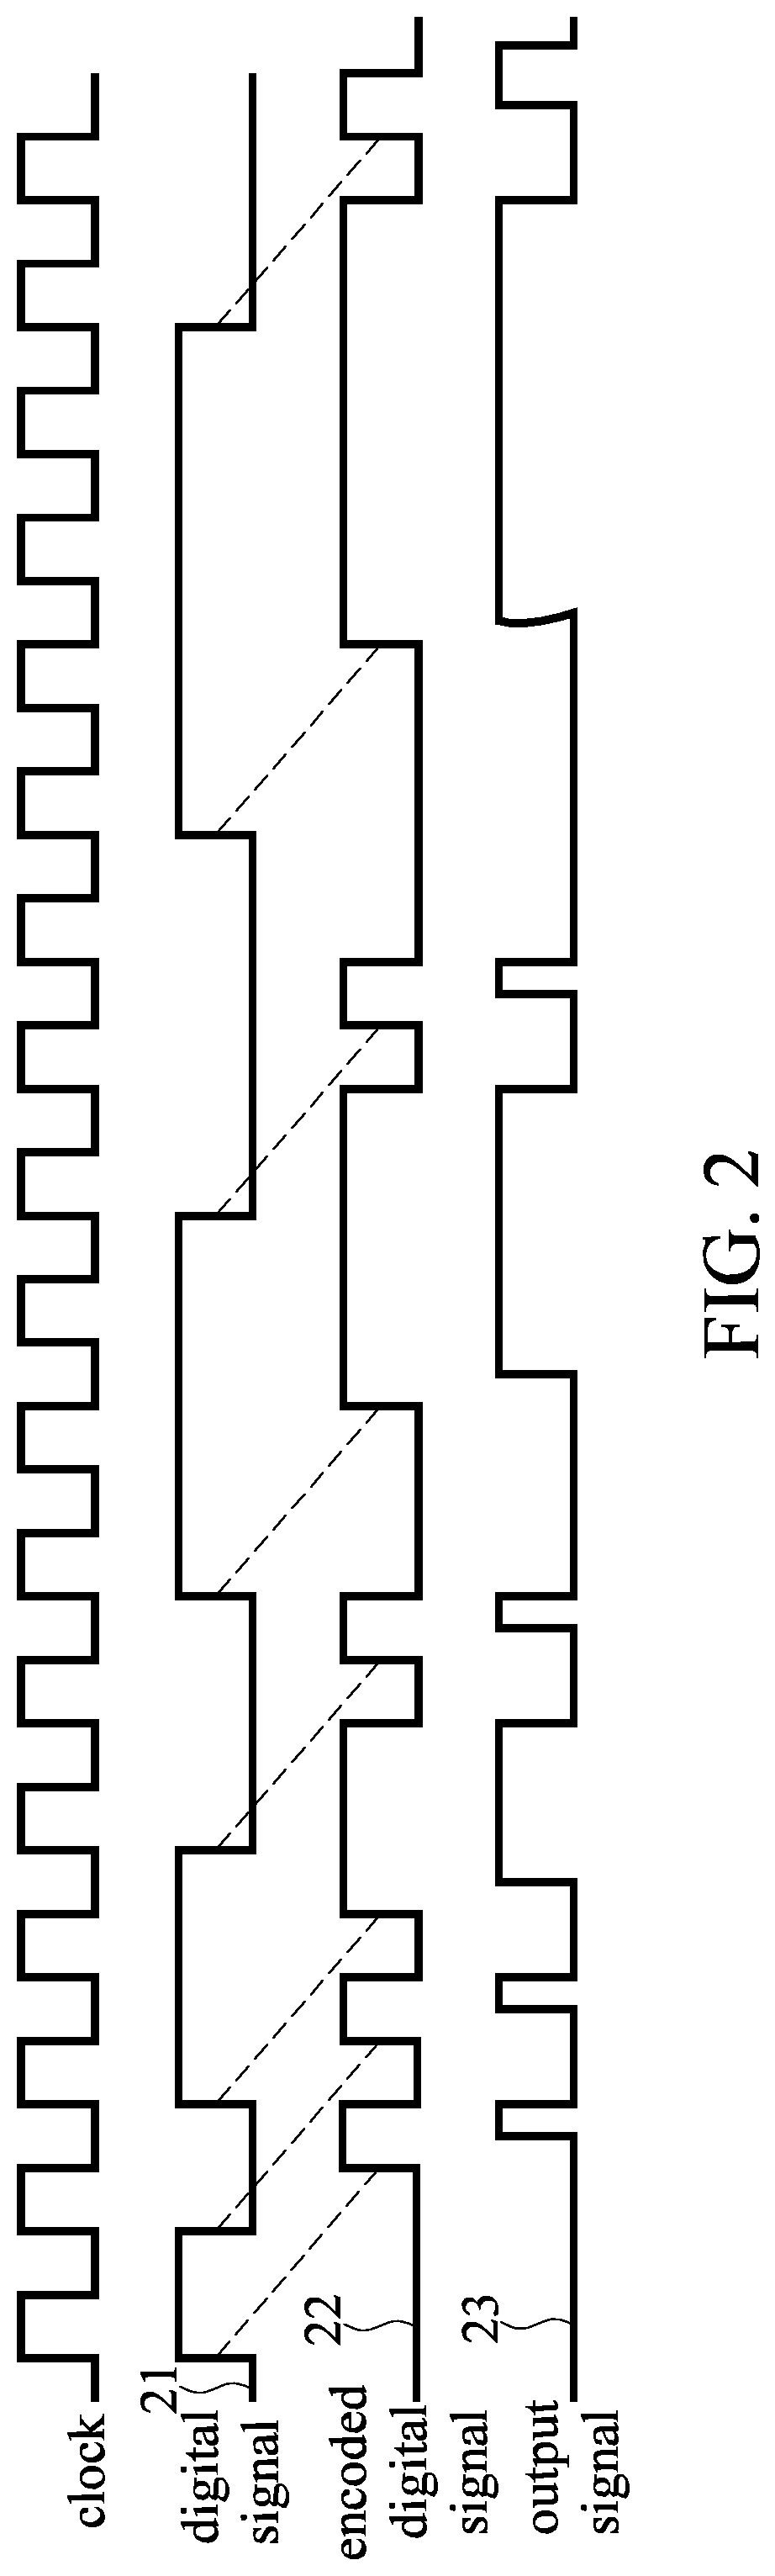 Encoding and decoding method for optical isolation amplifier employing sigma-delta modulation technology